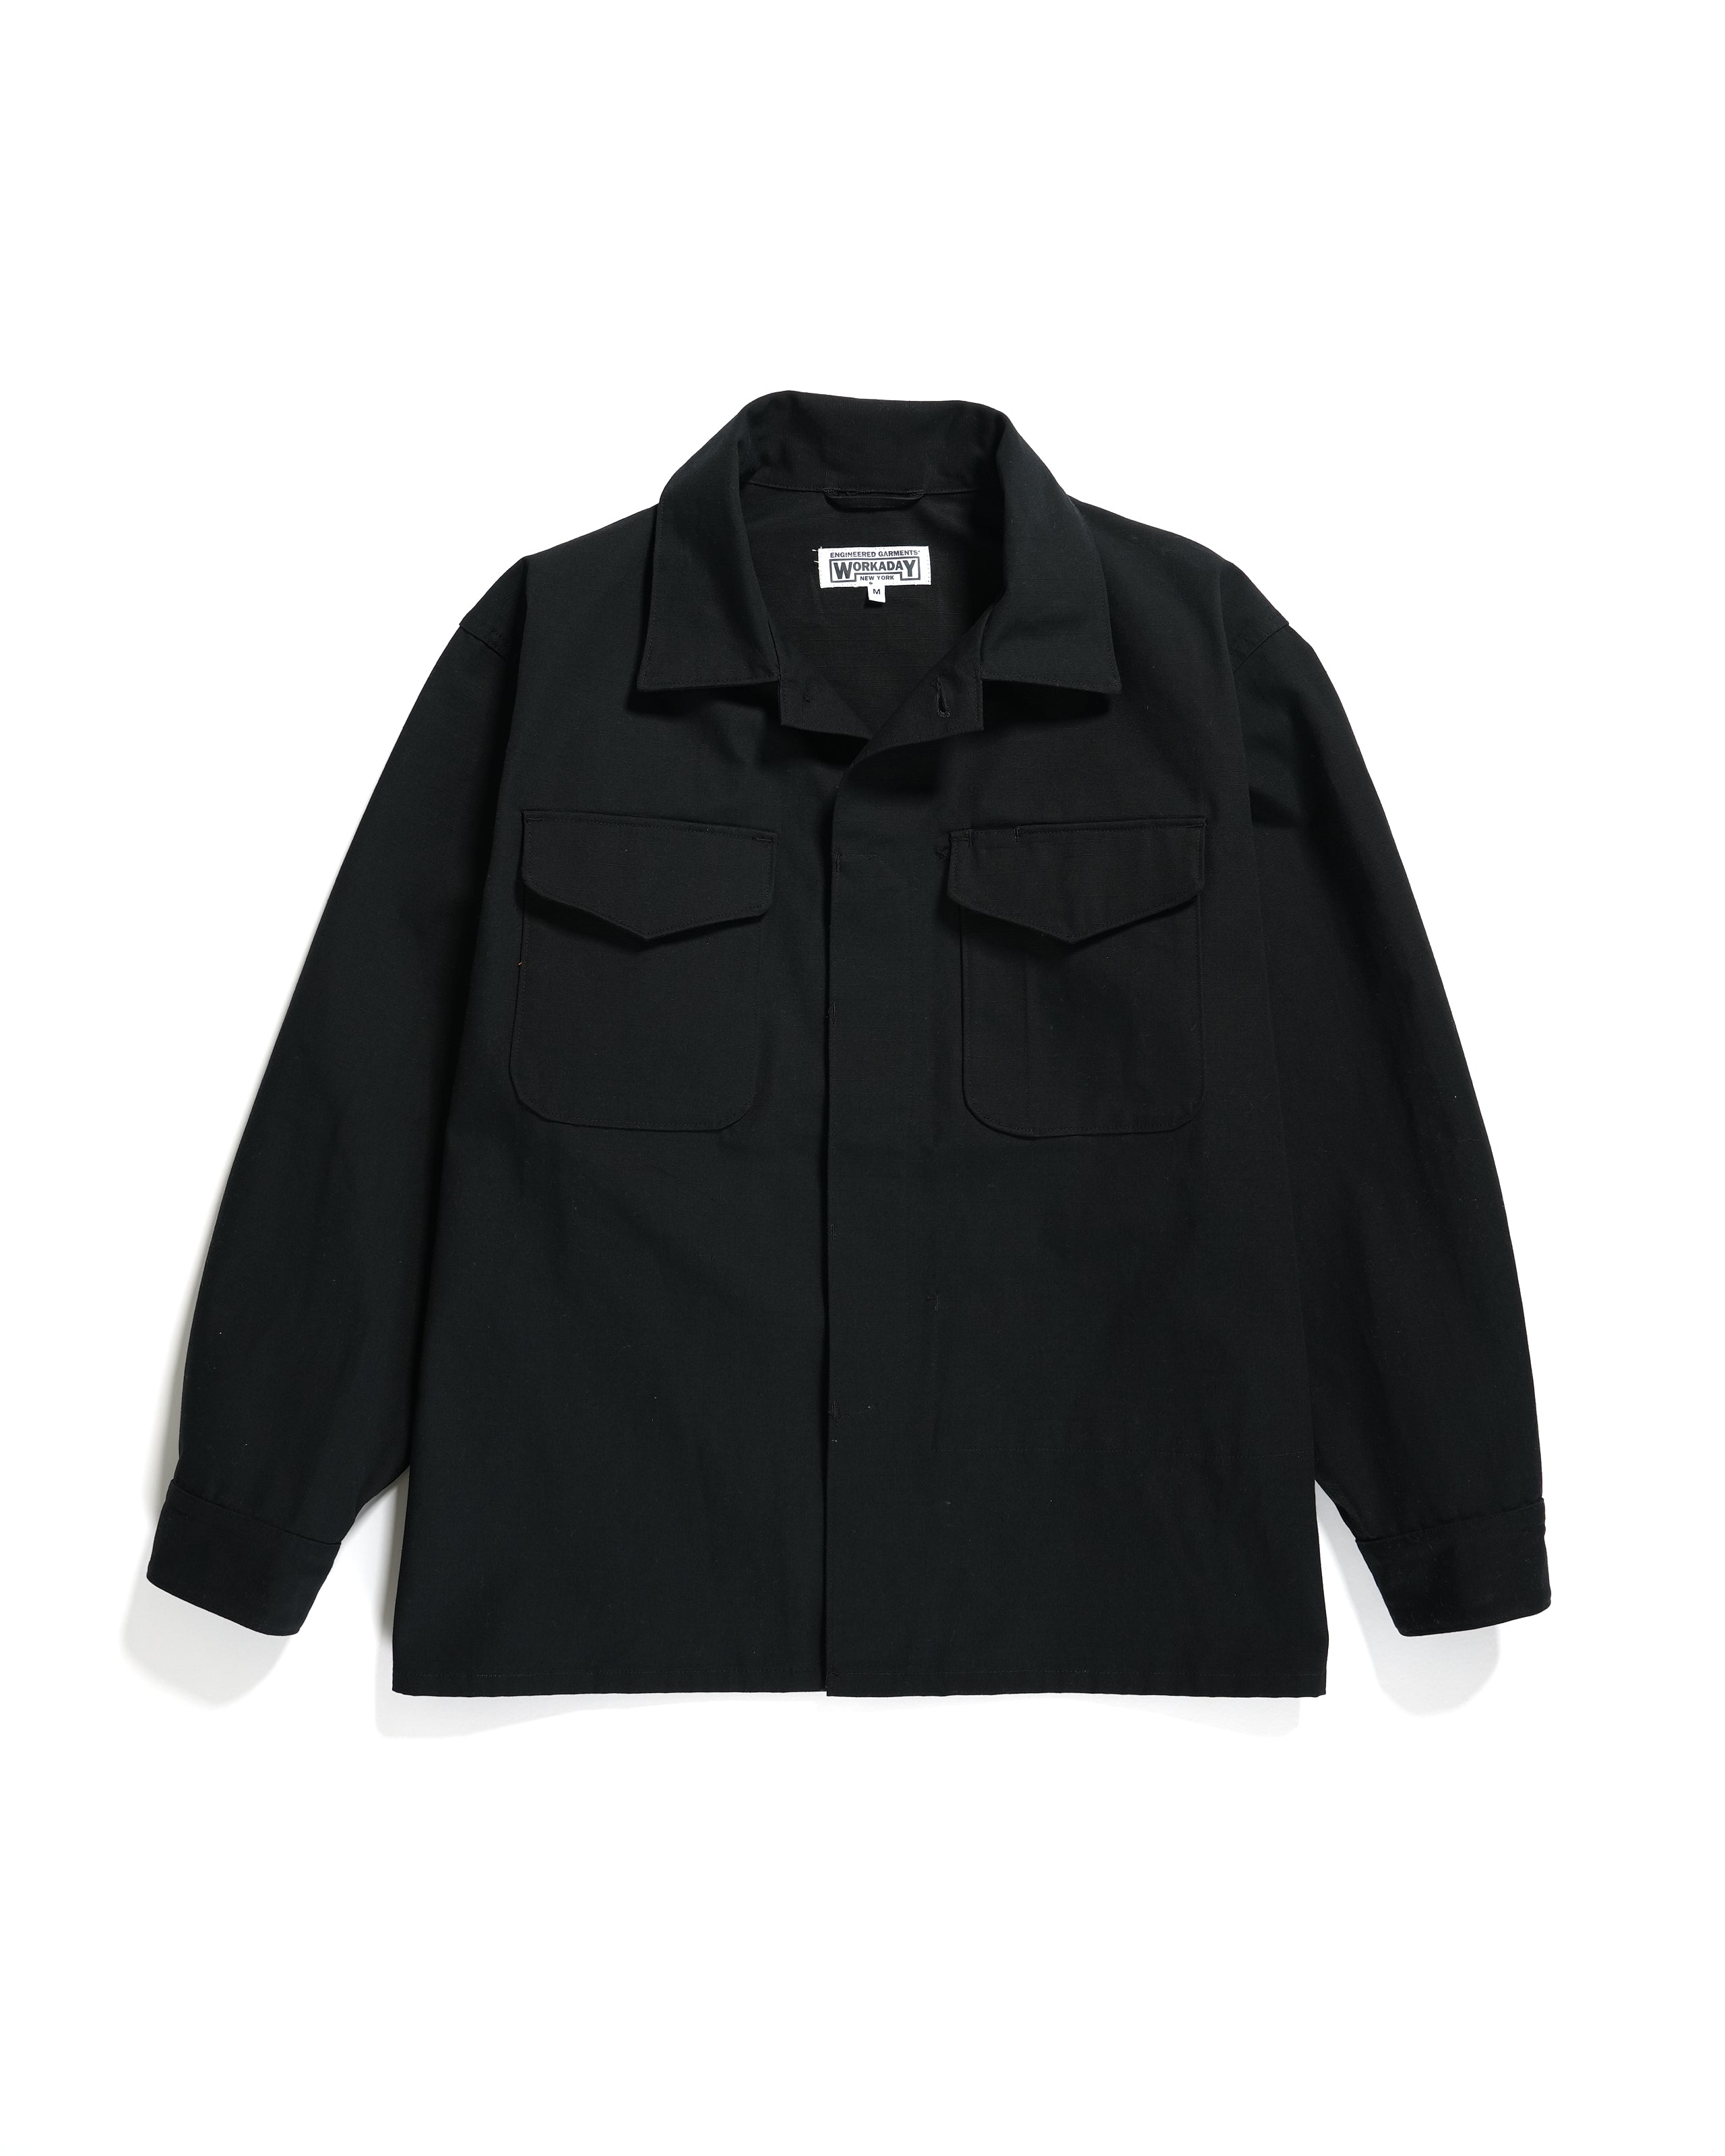 MC Shirt Jacket - Black Heavyweight Cotton Ripstop